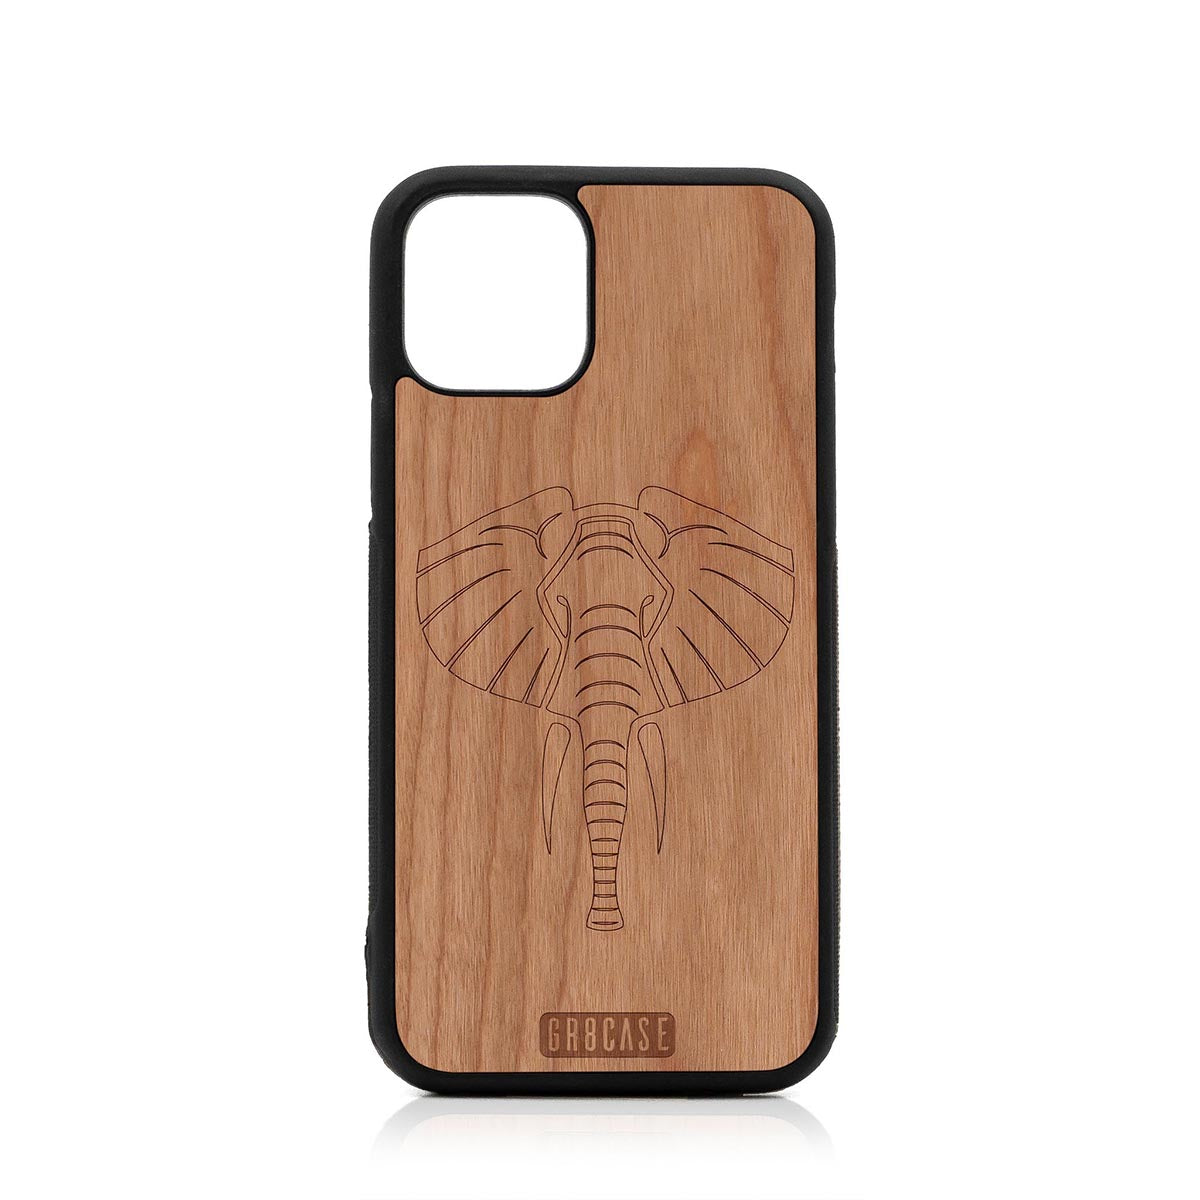 Elaphant Design Wood Case For iPhone 11 Pro by GR8CASE